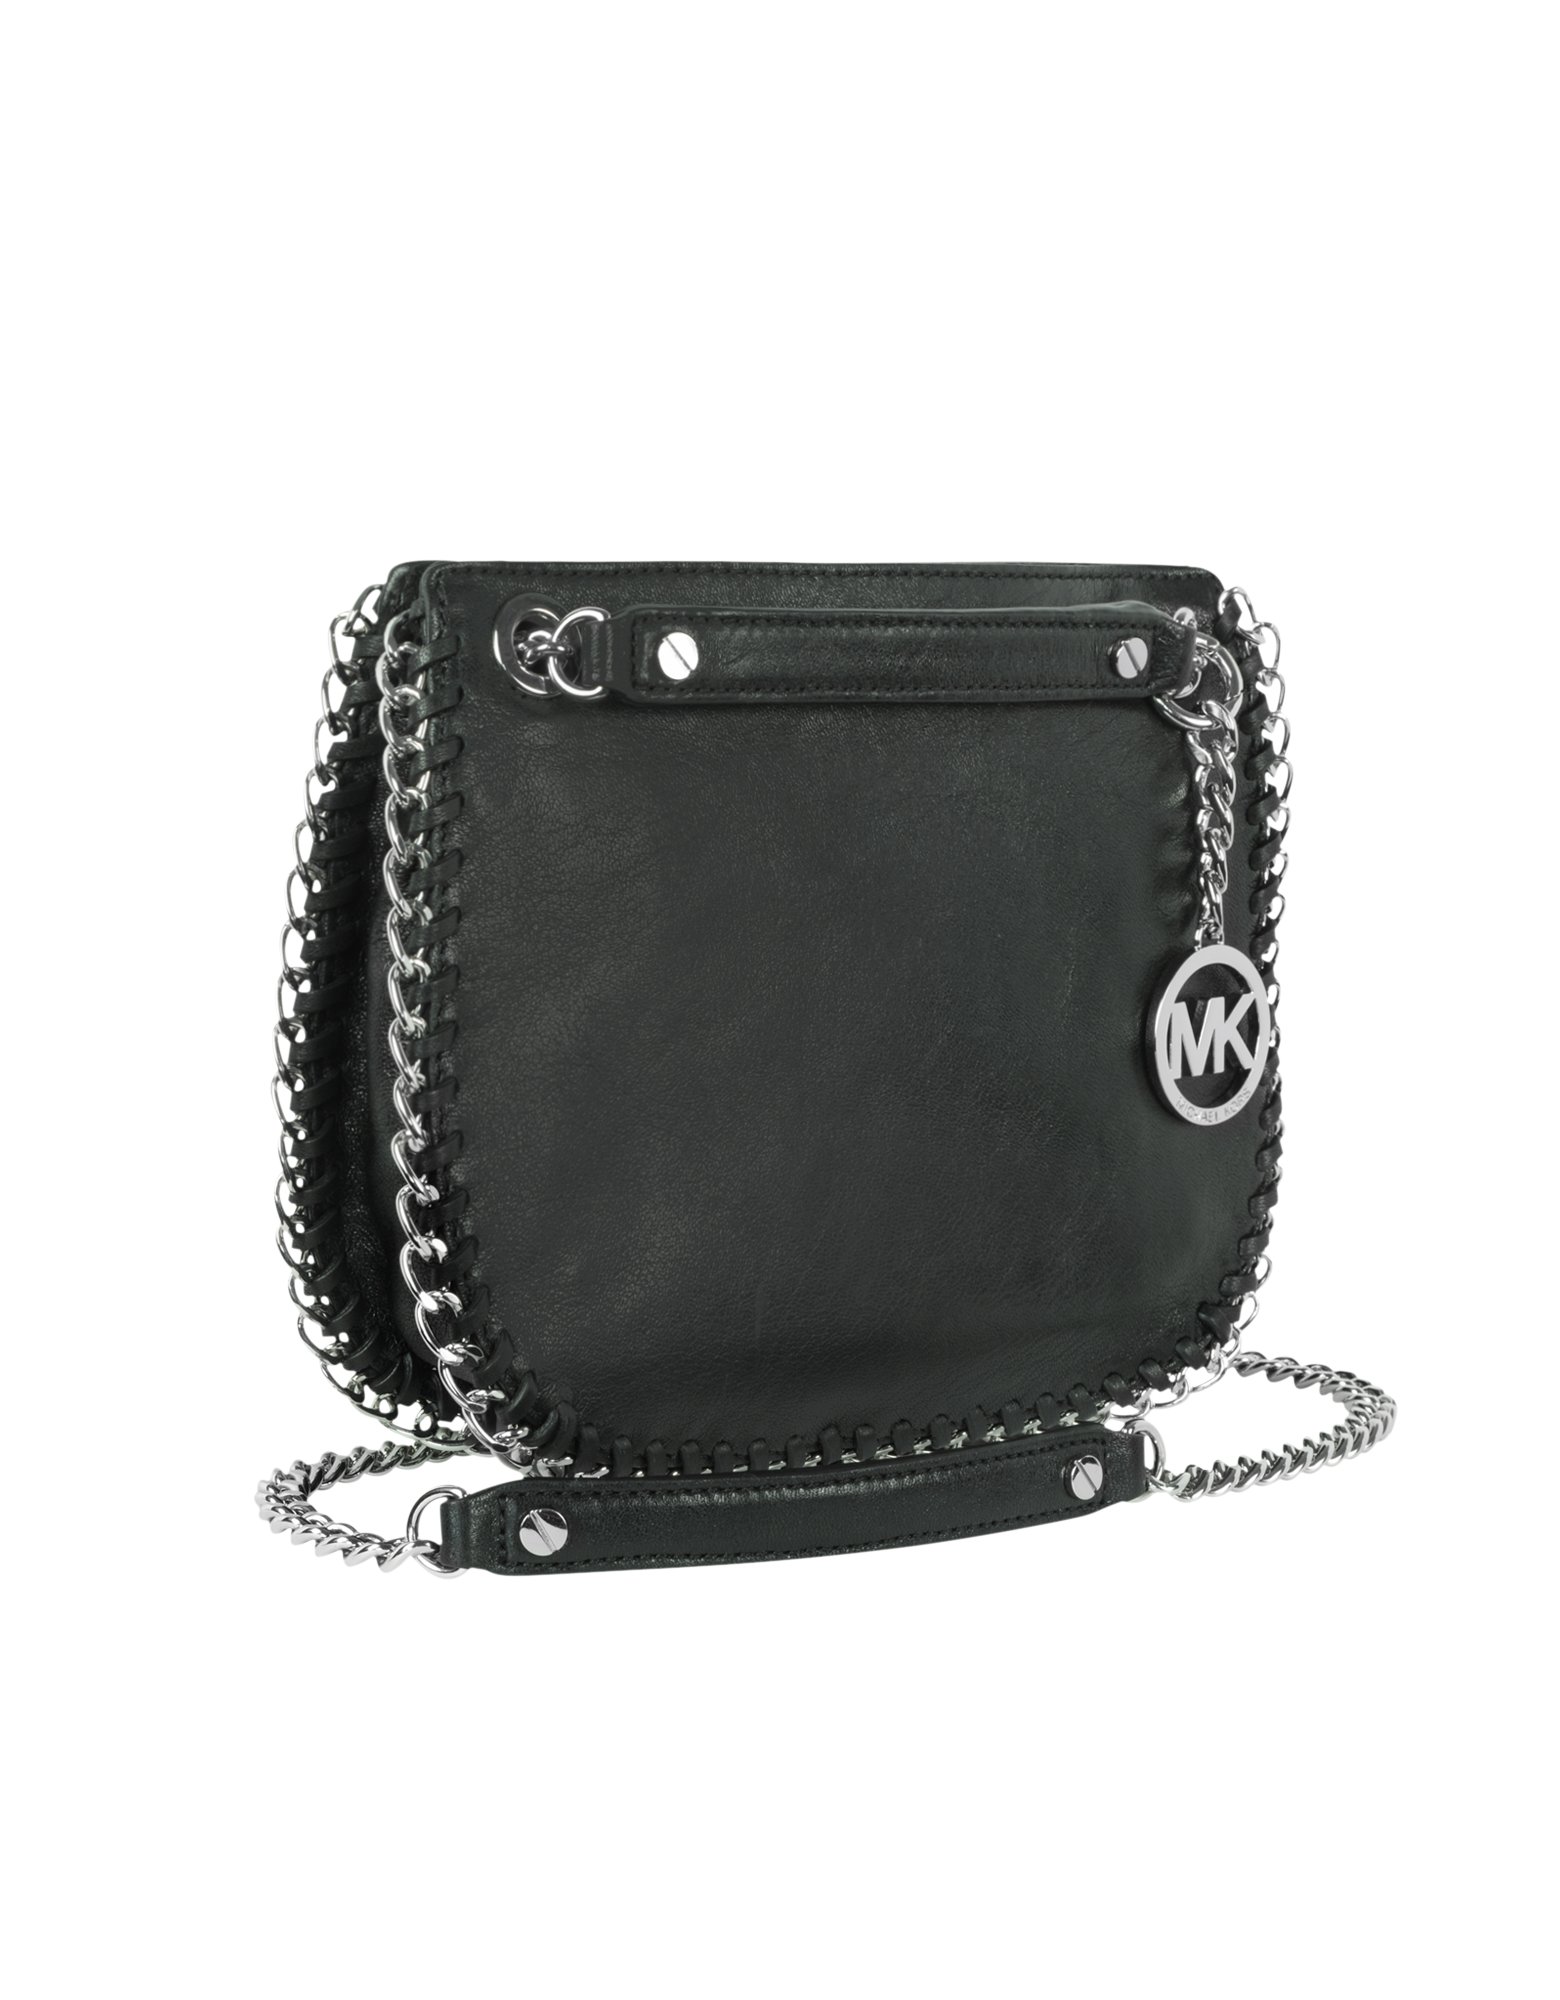 Michael kors Chelsea Small Leather Messenger Bag in Black | Lyst